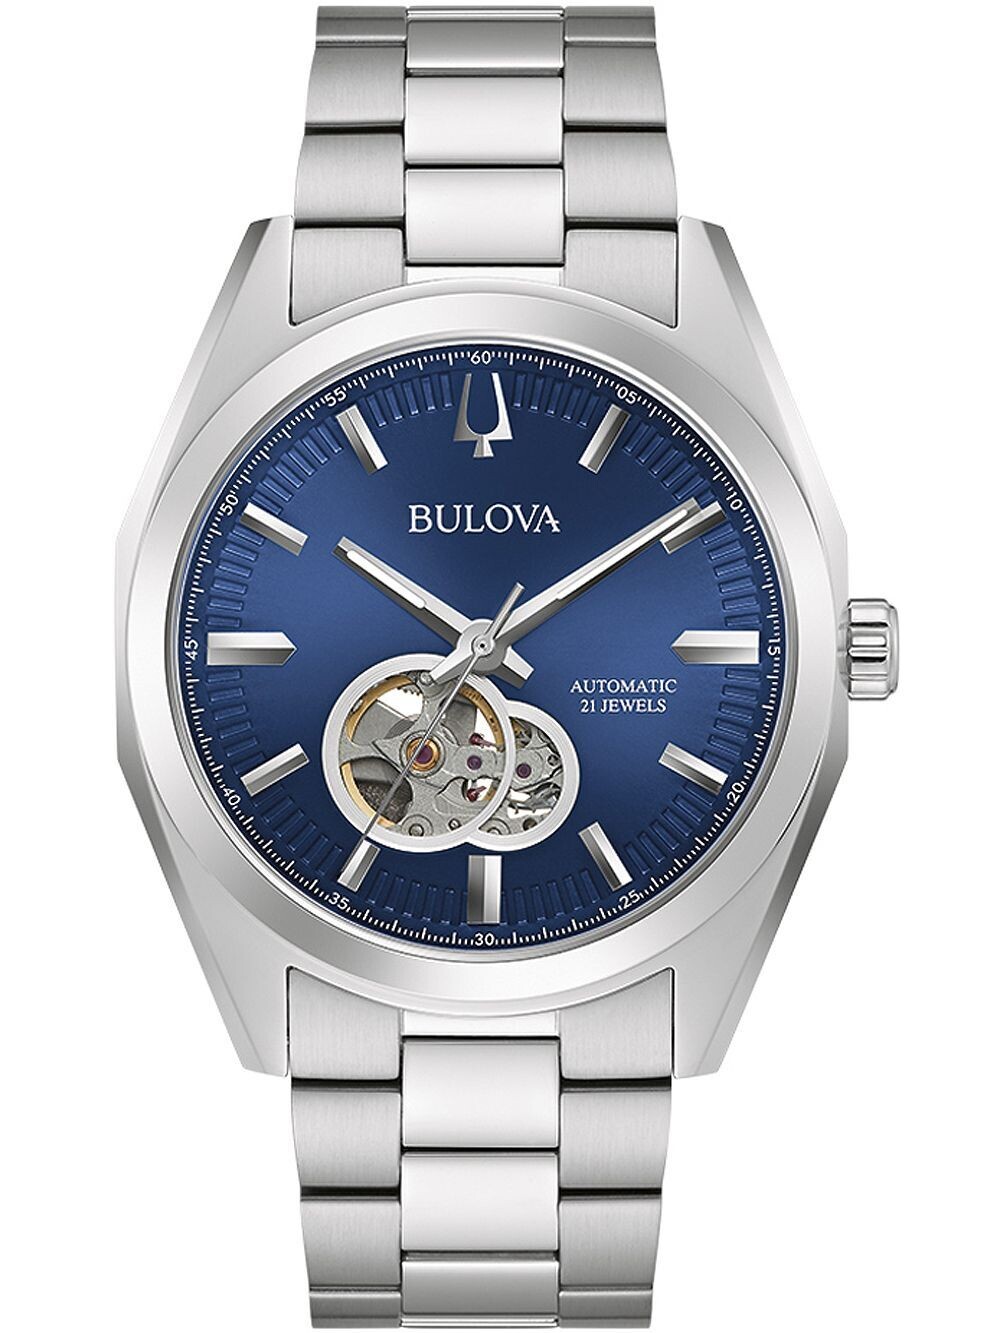 Bulova Surveyor 96A275 42mm 30m WR / 3ATM automatic men's watch blue dial stainless steel bracelet